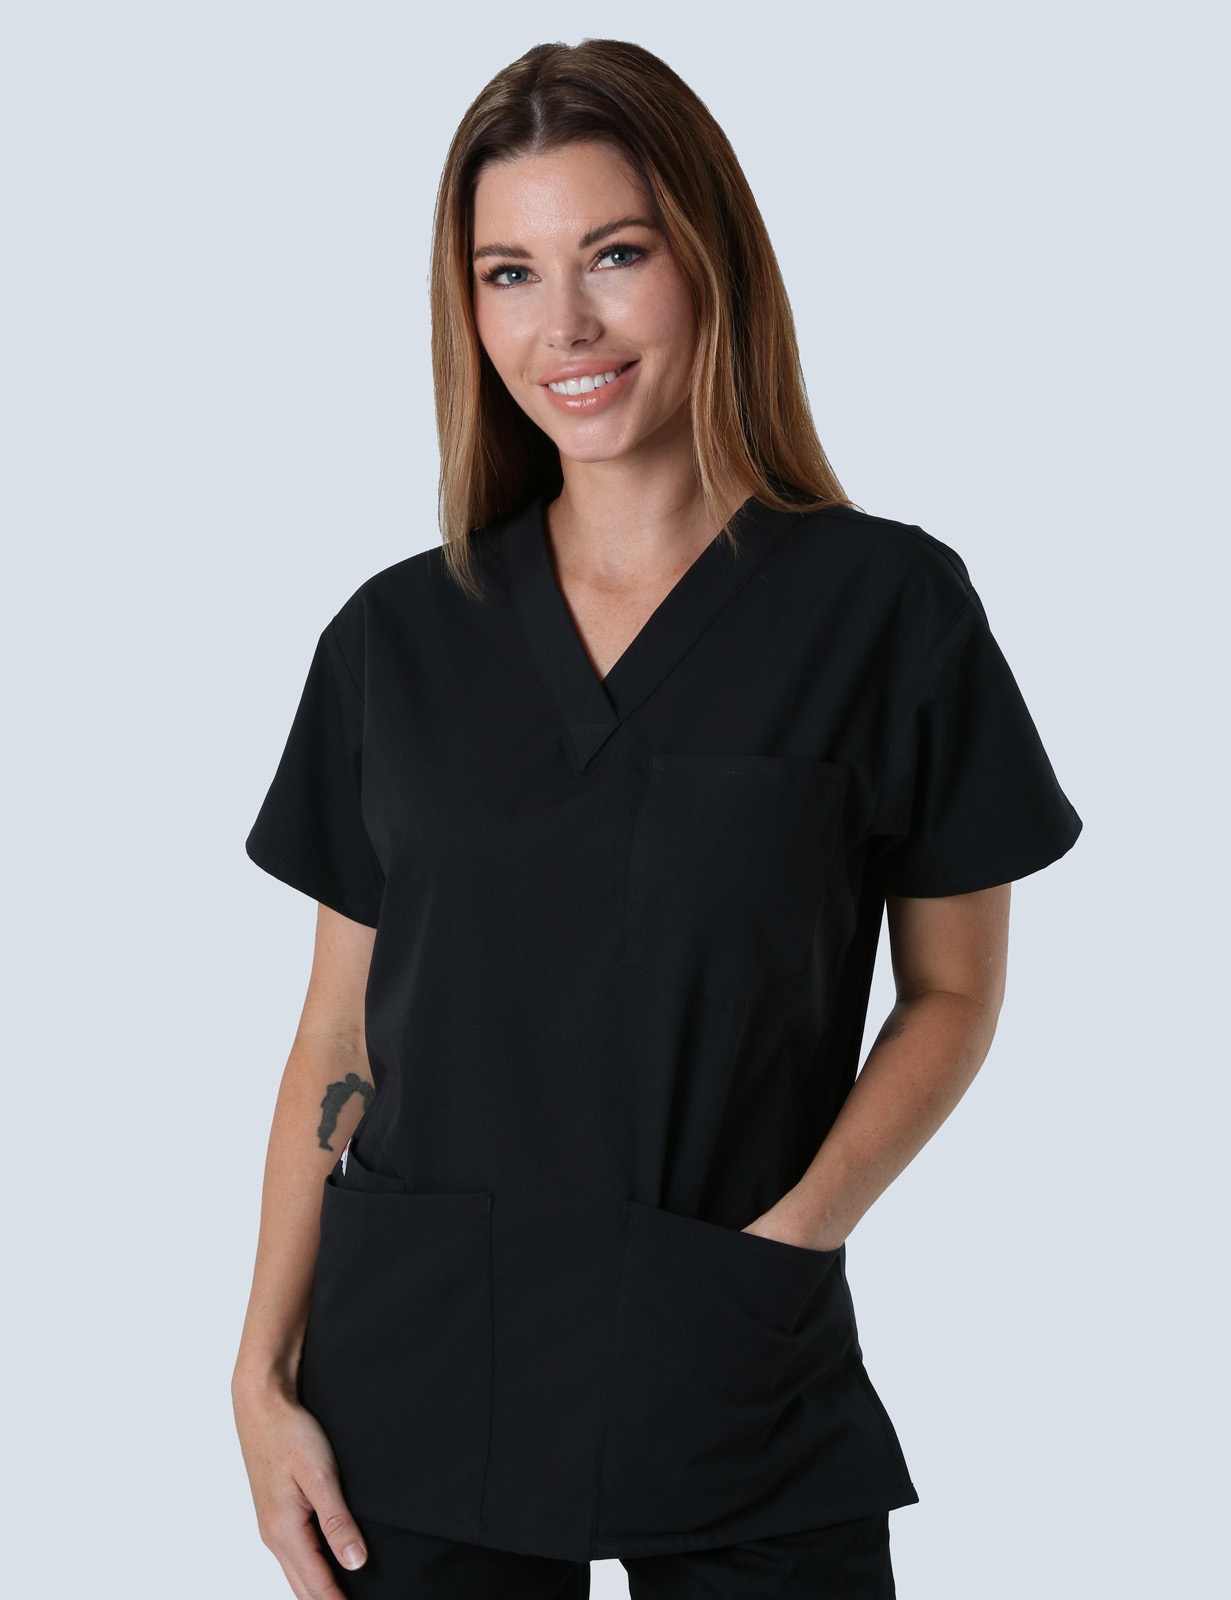 Darwin Hospital - Emergency Physician (4 Pocket Scrub Top and Cargo Pants in Black incl Logos)